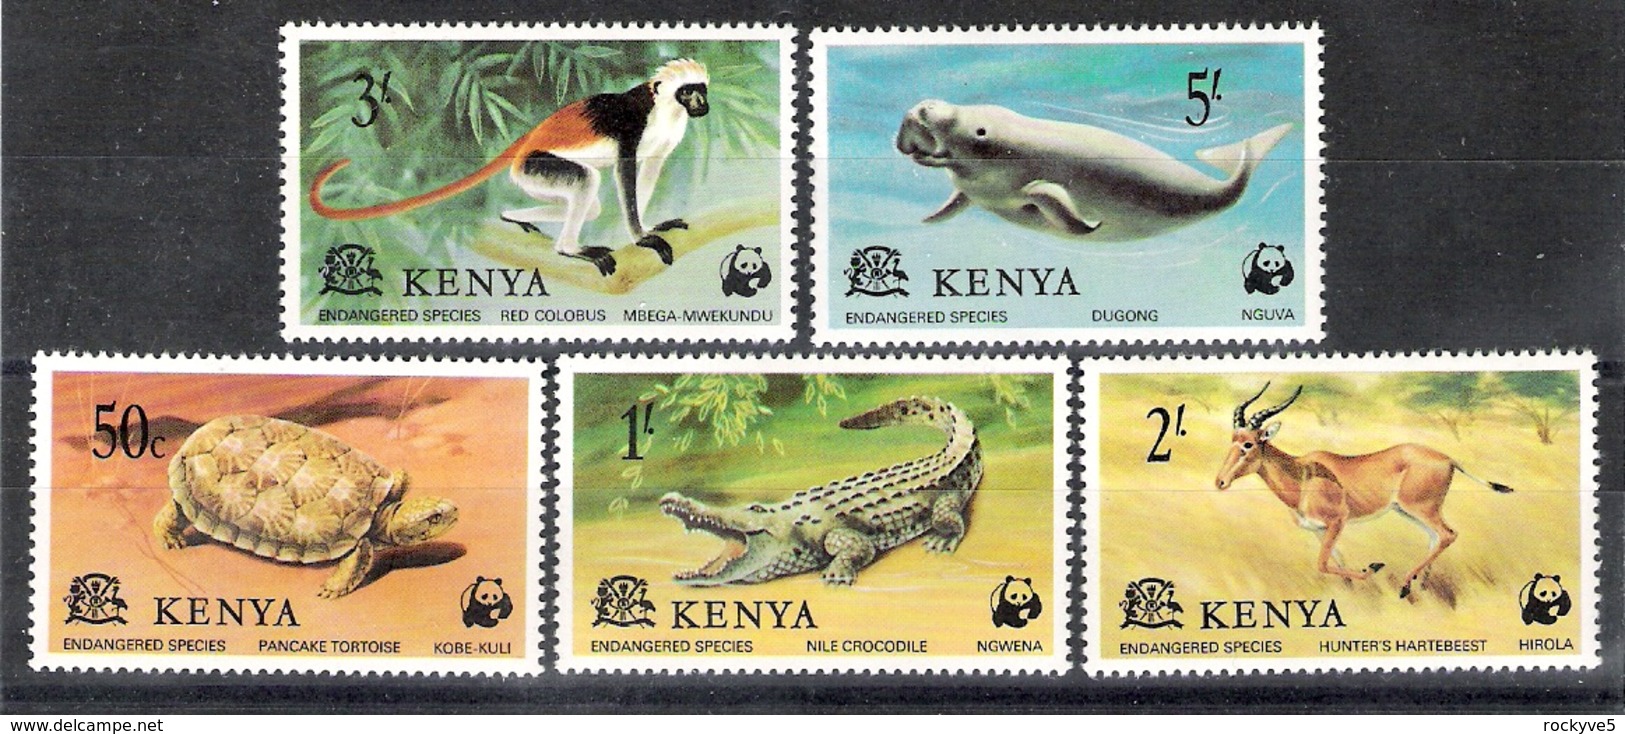 Kenya 1977 WWF Endangered Species MLH CV £3.95 - Game